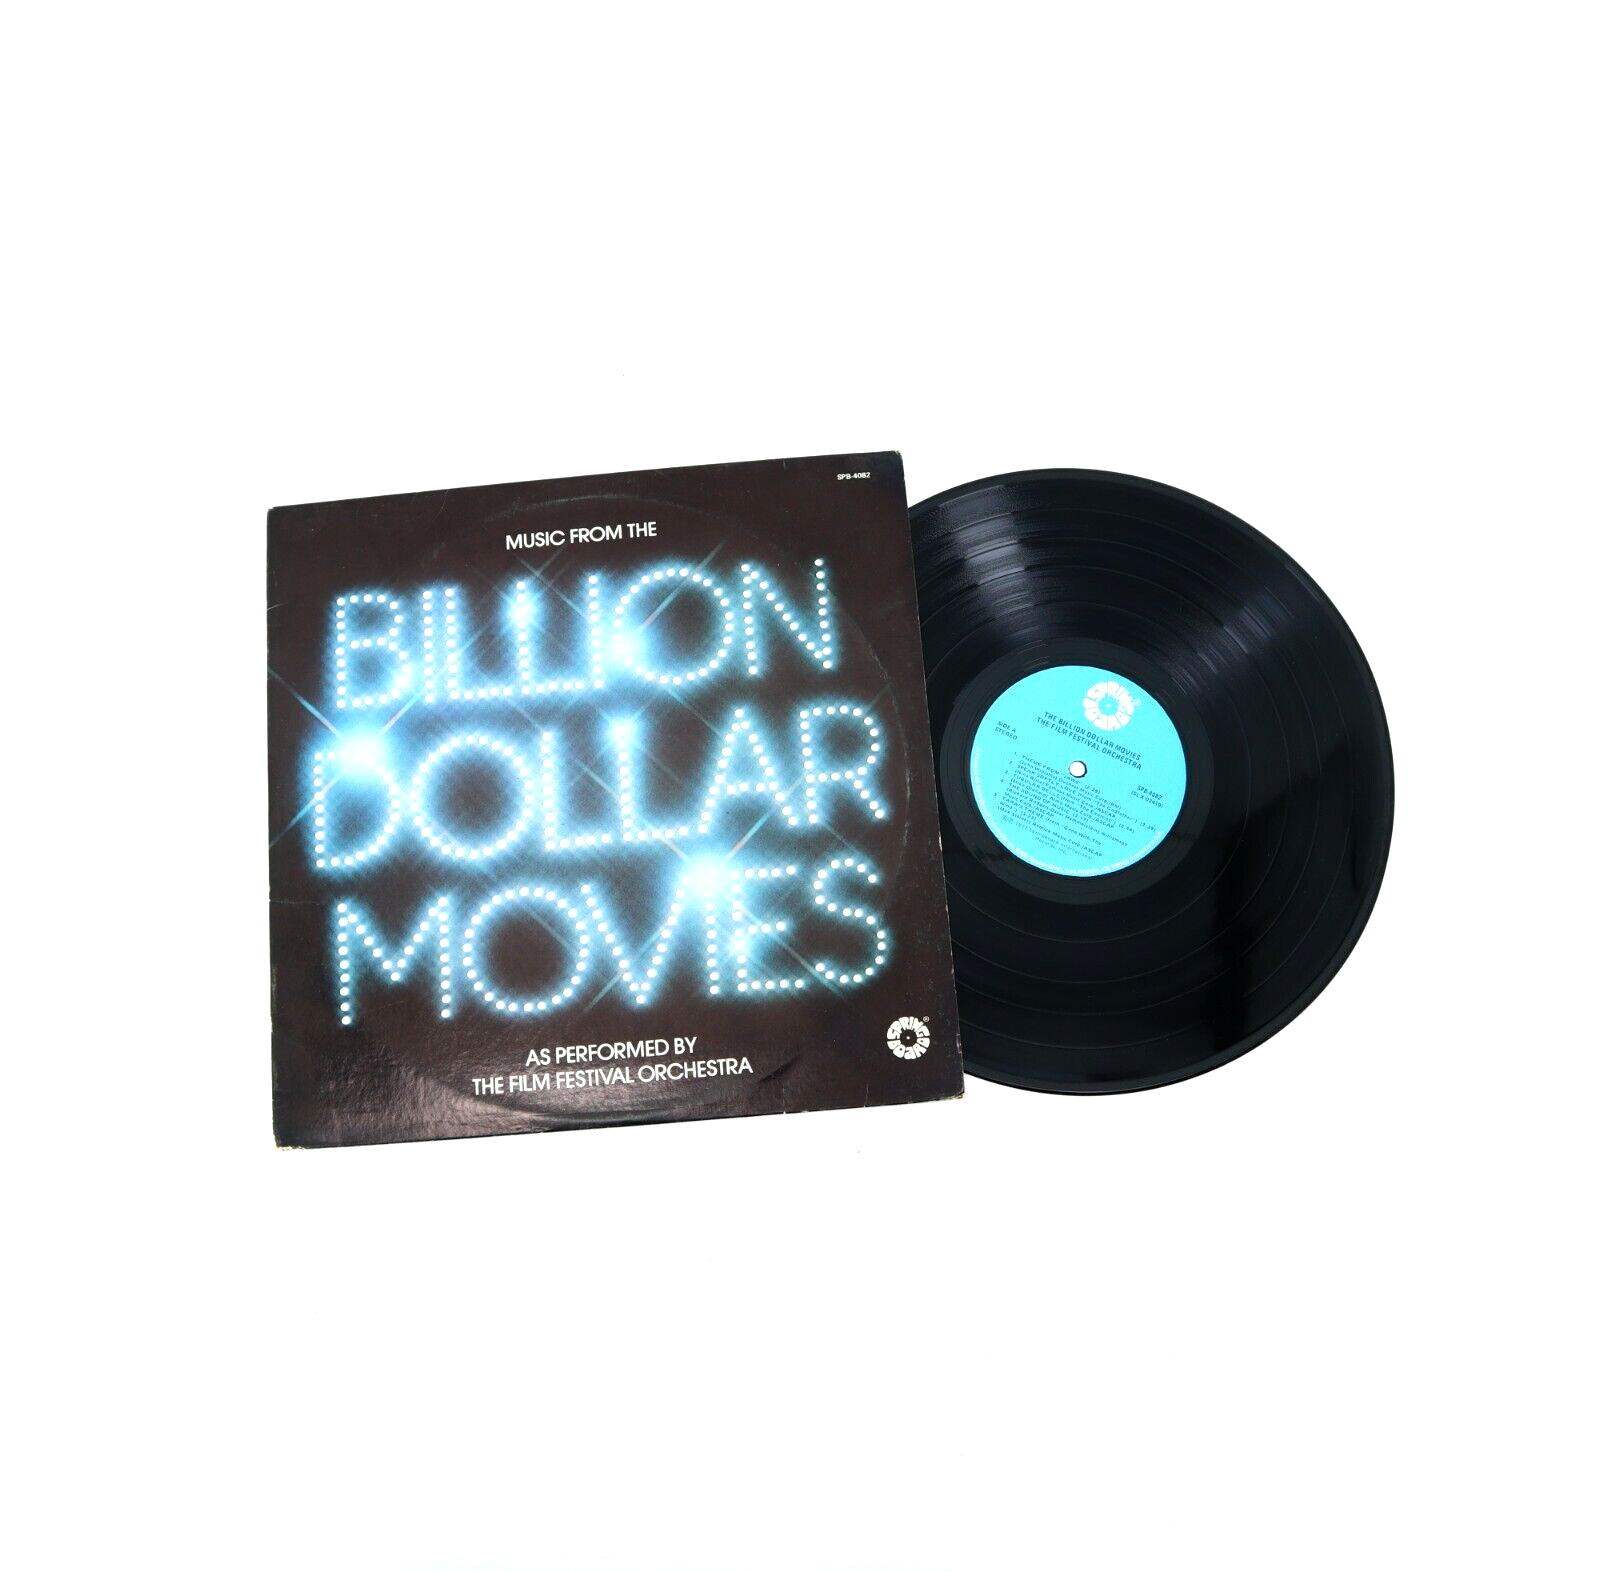 1977 Music from the Billion Dollar Movies Film Festival Orchestra Vinyl Vintage 